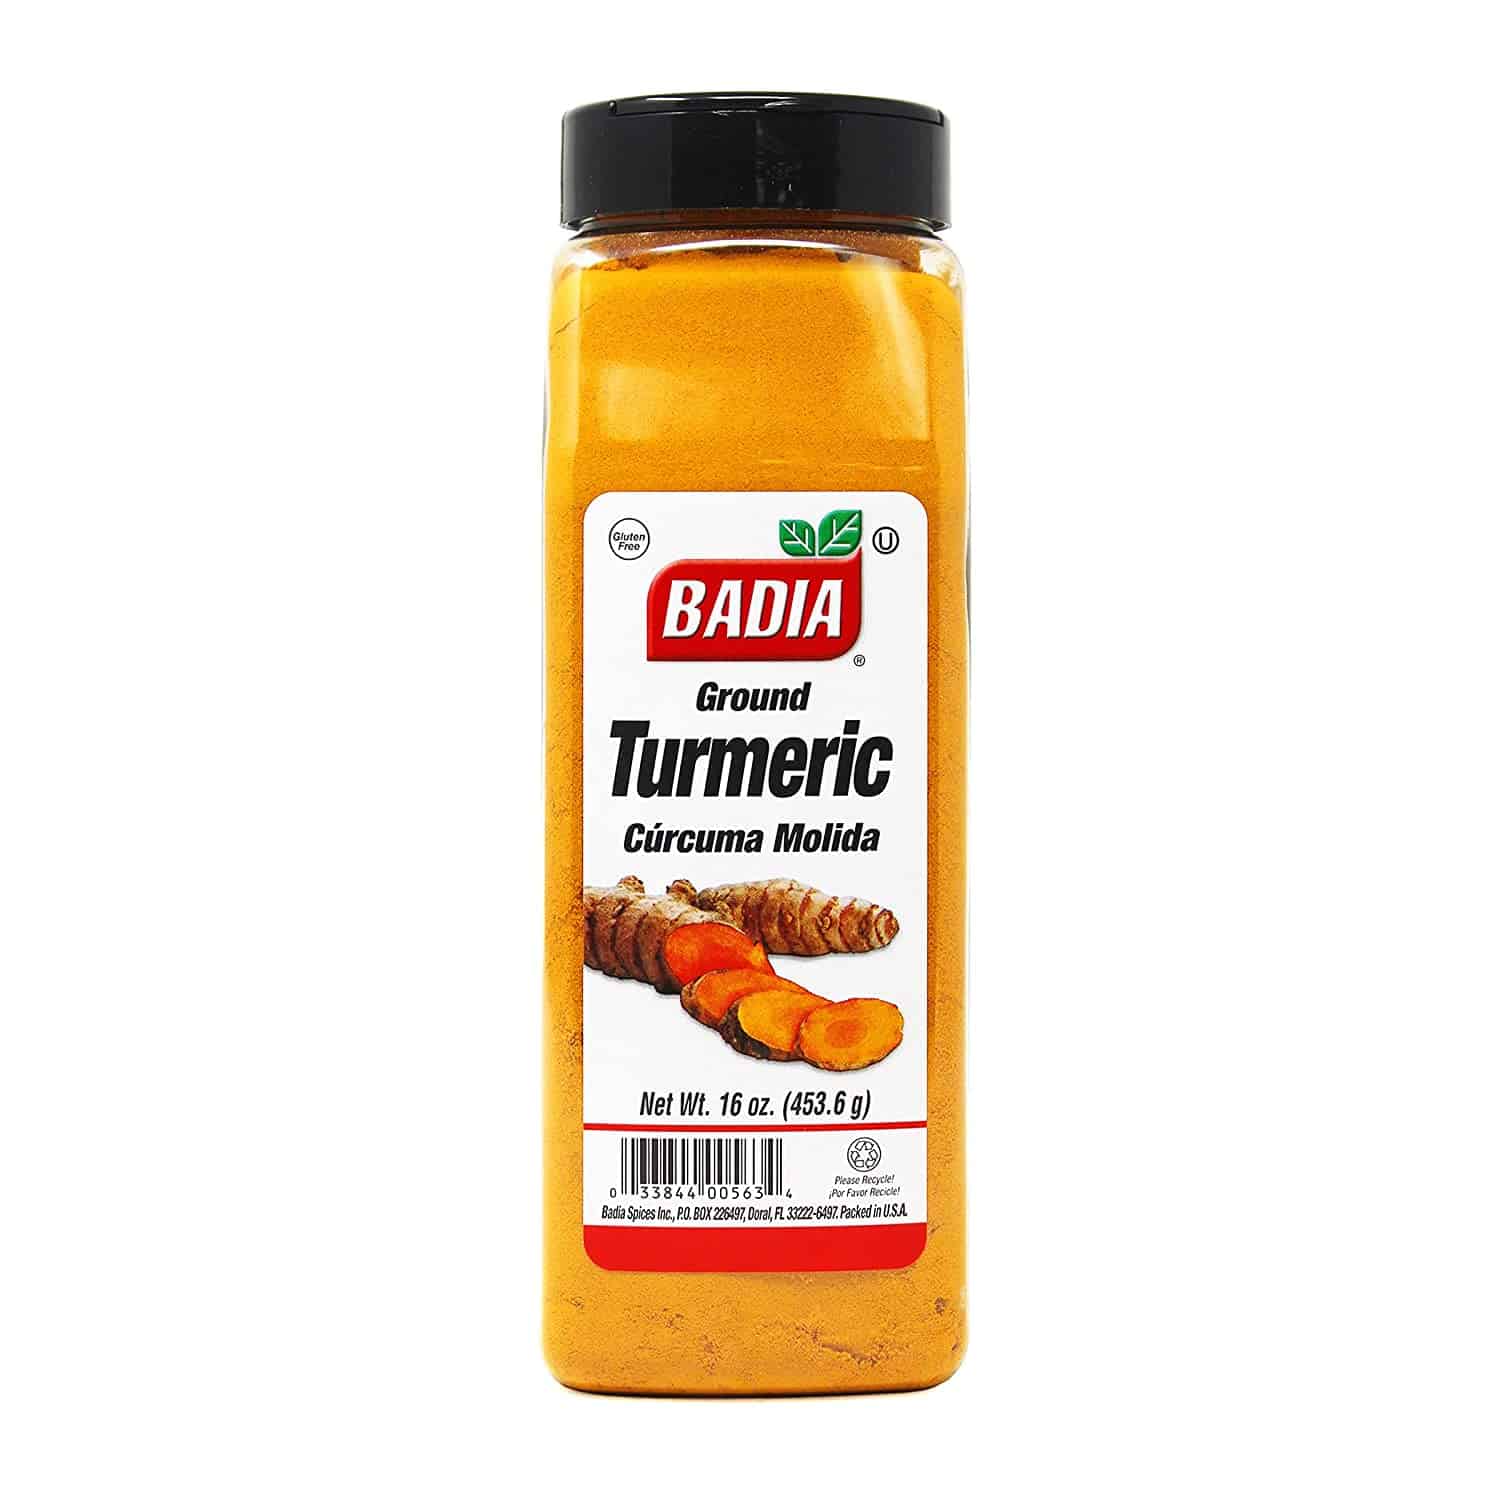 Ground turmeric powder as a substitute to annatto powder